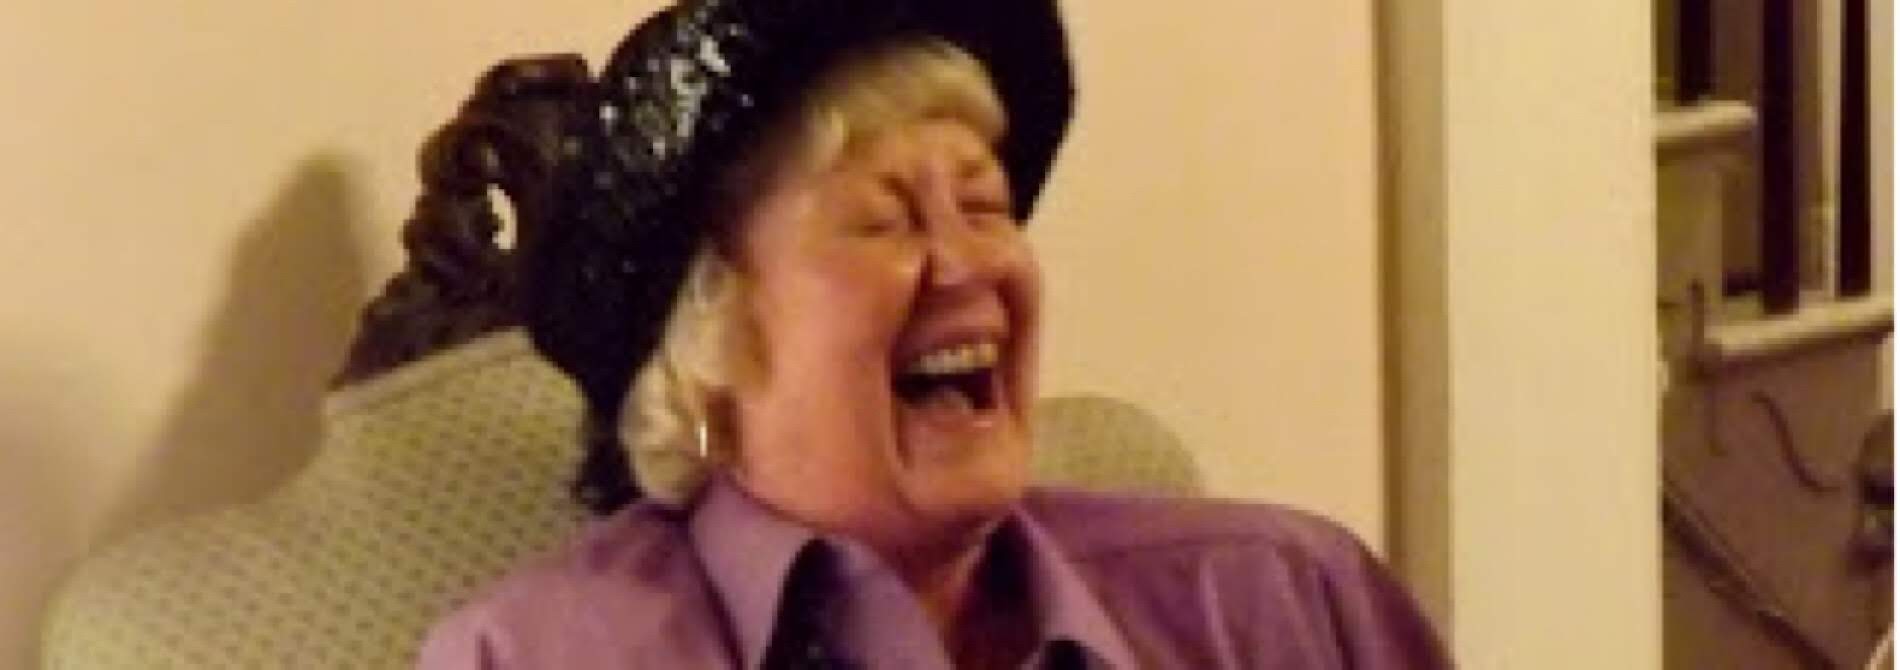 woman laughing big